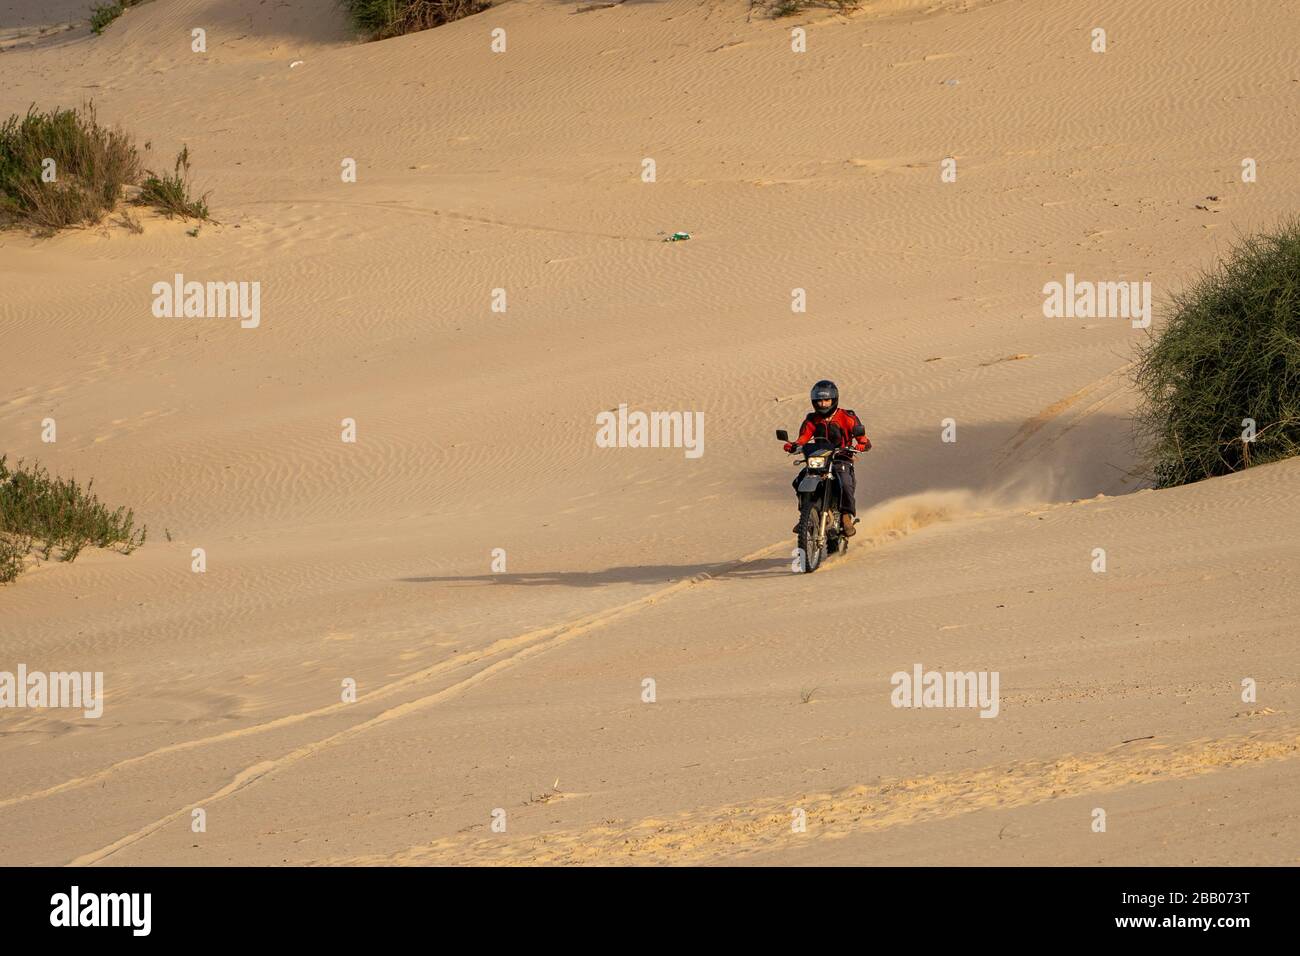 Dirt bike on a sand dune Stock Photo